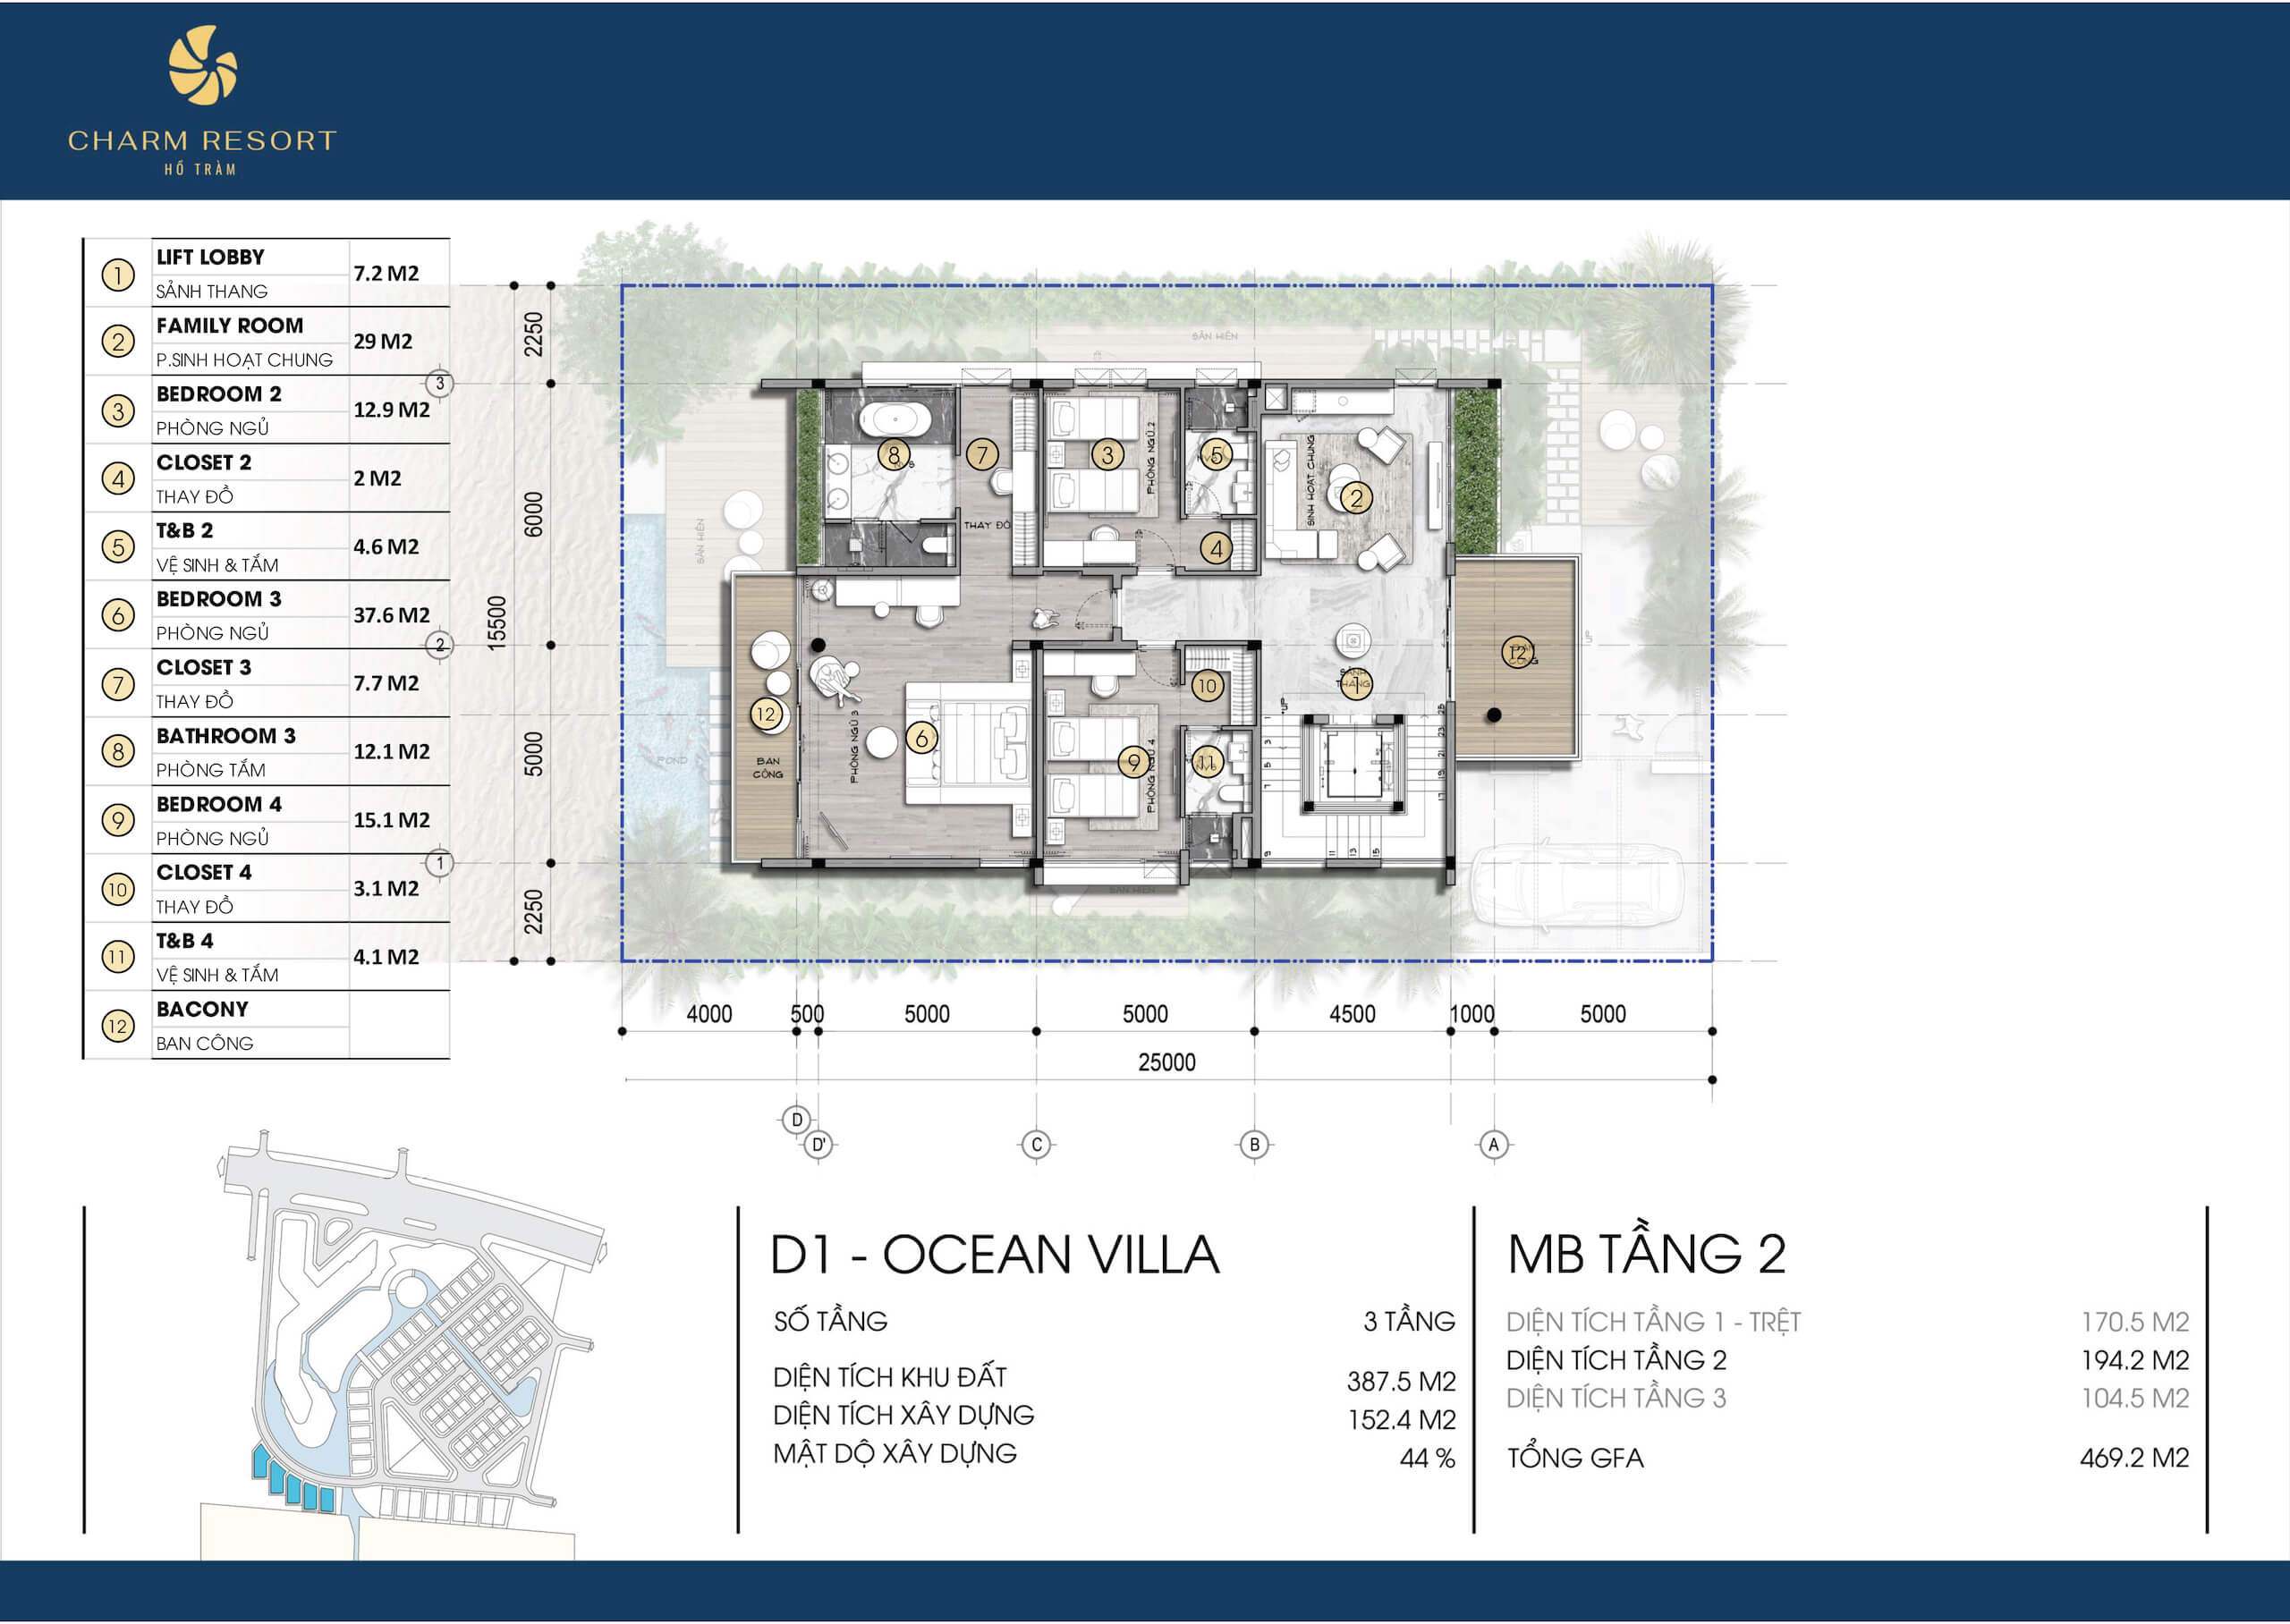 Mặt bằng layout Ocean Villa Charm Resort Hồ Tràm